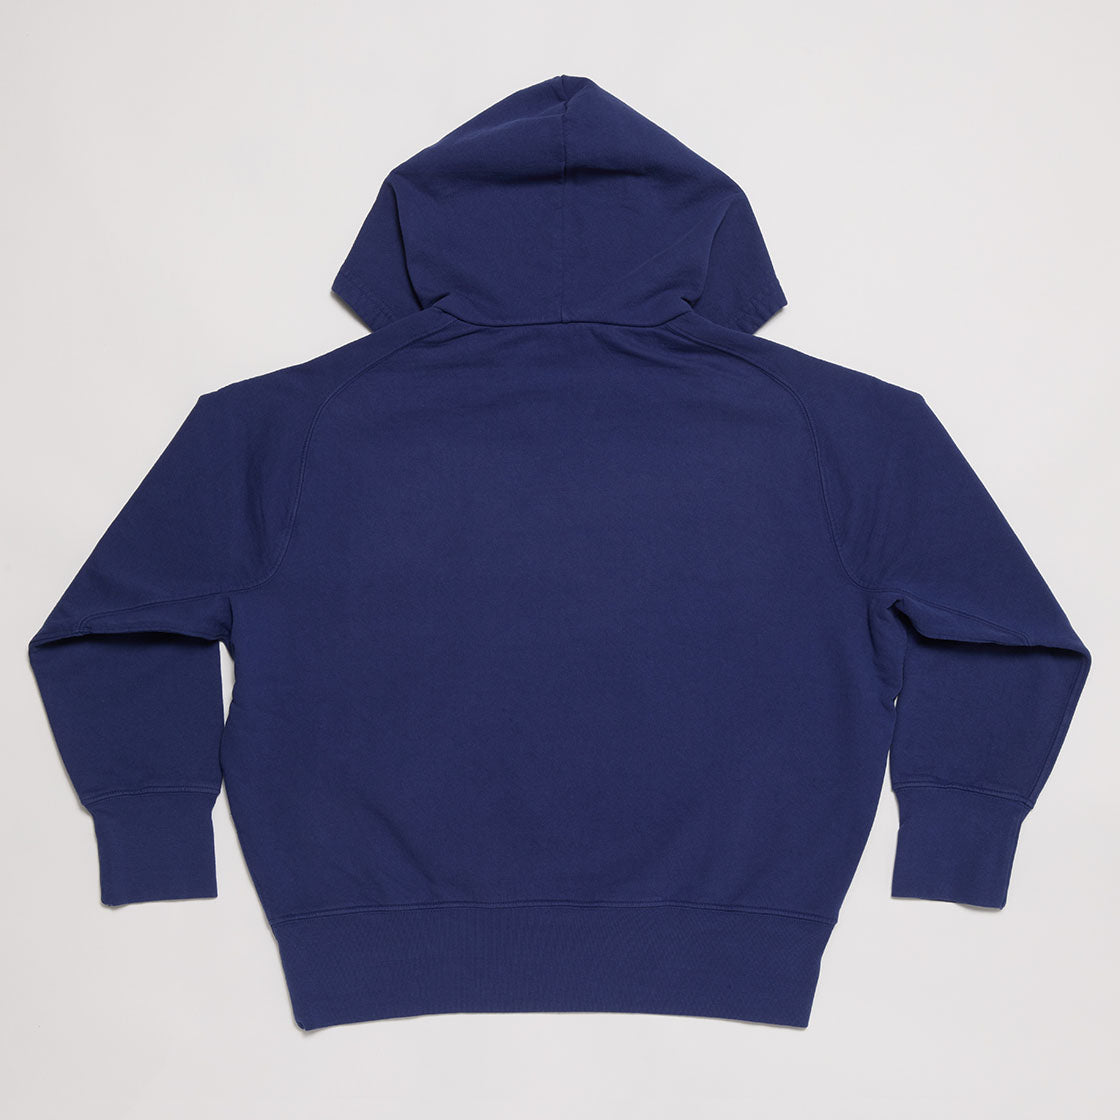 Pull-over Hooded Sweatshirt (Navy)